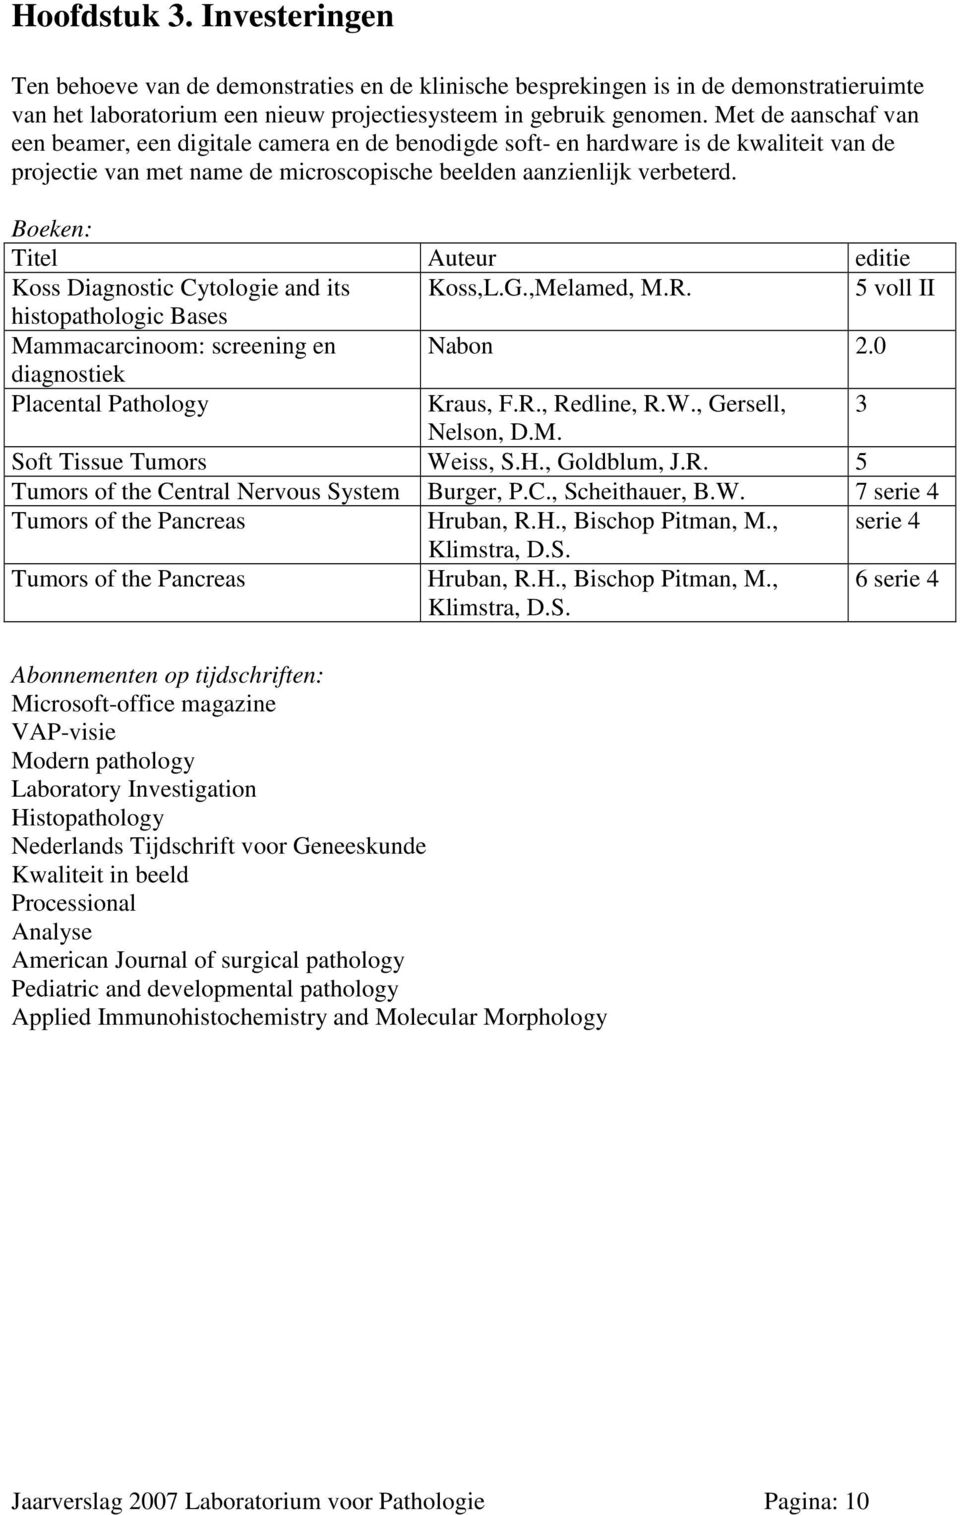 Boeken: Titel Auteur editie Koss Diagnostic Cytologie and its Koss,L.G.,Melamed, M.R. 5 voll II histopathologic Bases Mammacarcinoom: screening en Nabon 2.0 diagnostiek Placental Pathology Kraus, F.R., Redline, R.